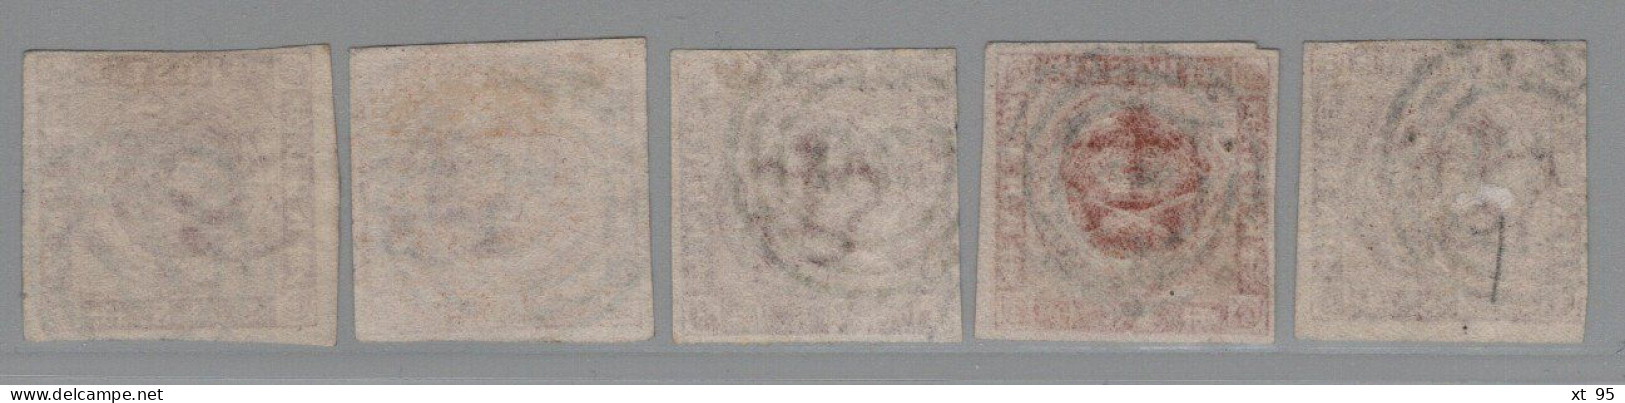 Danemark - N°4 - Lot De 5 Timbres Obliteres - Cote +90€ - Used Stamps